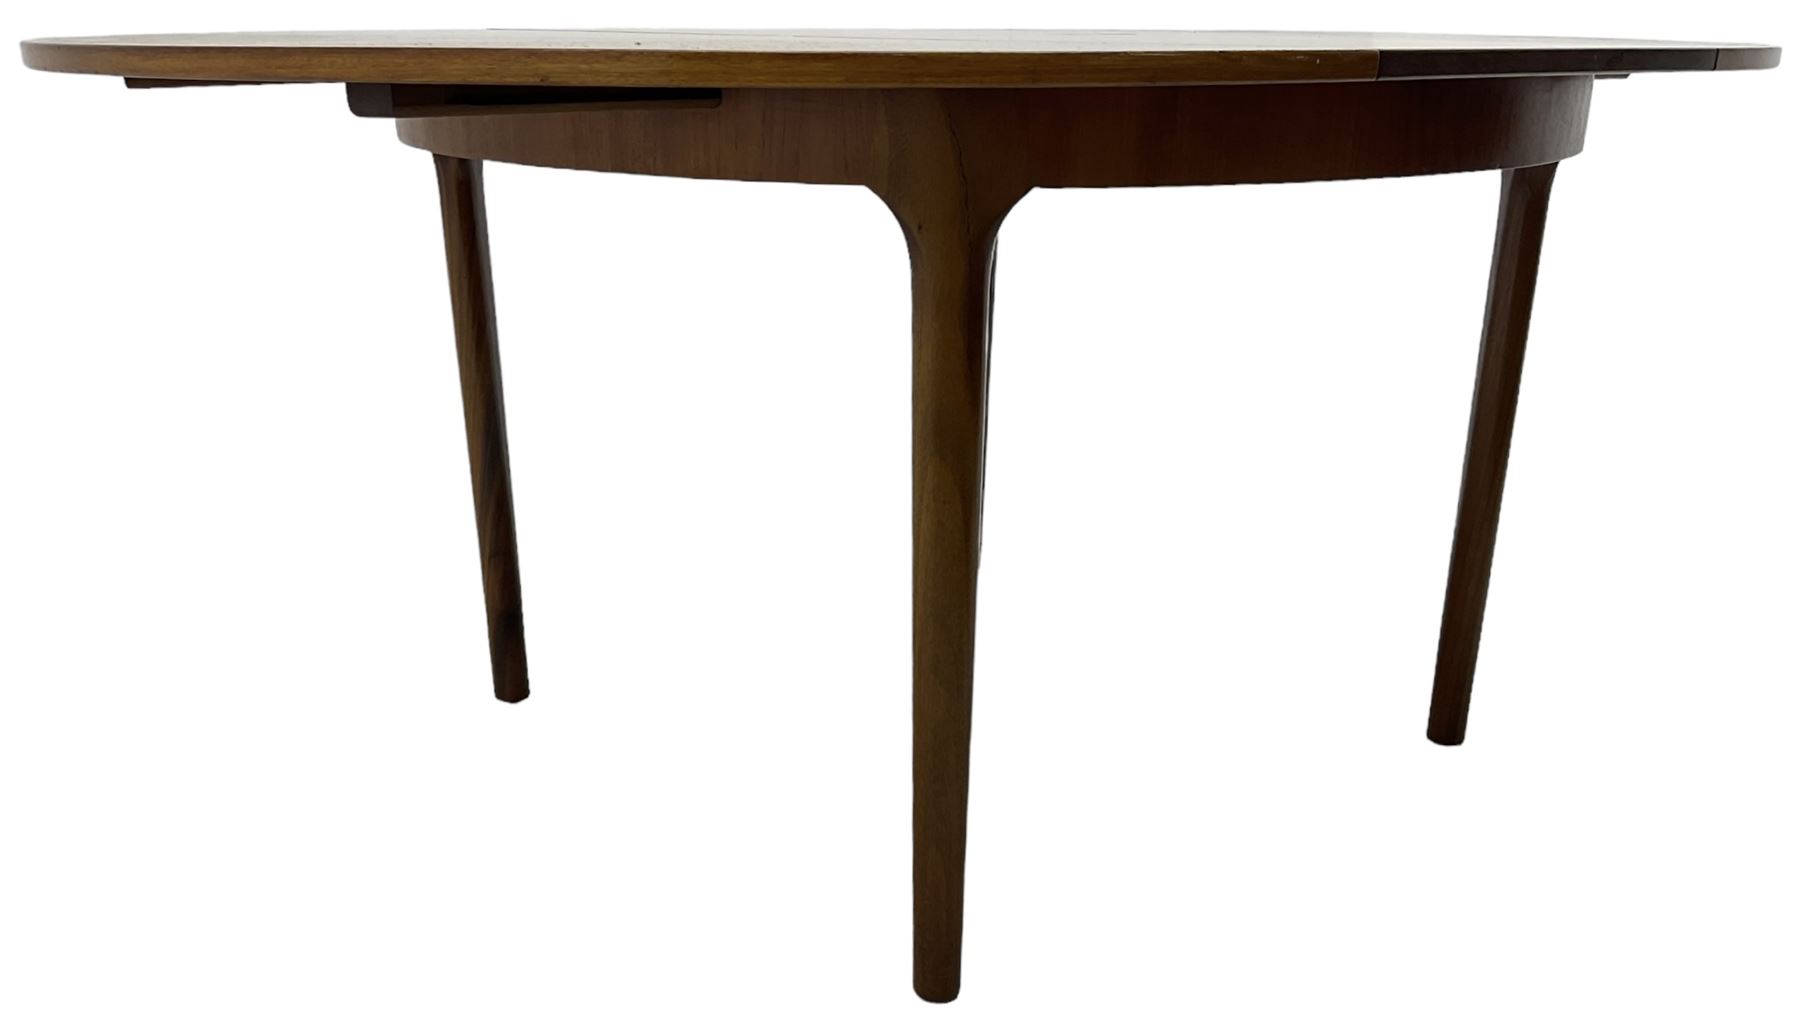 McIntosh - mid-20th century teak extending dining table - Image 7 of 7